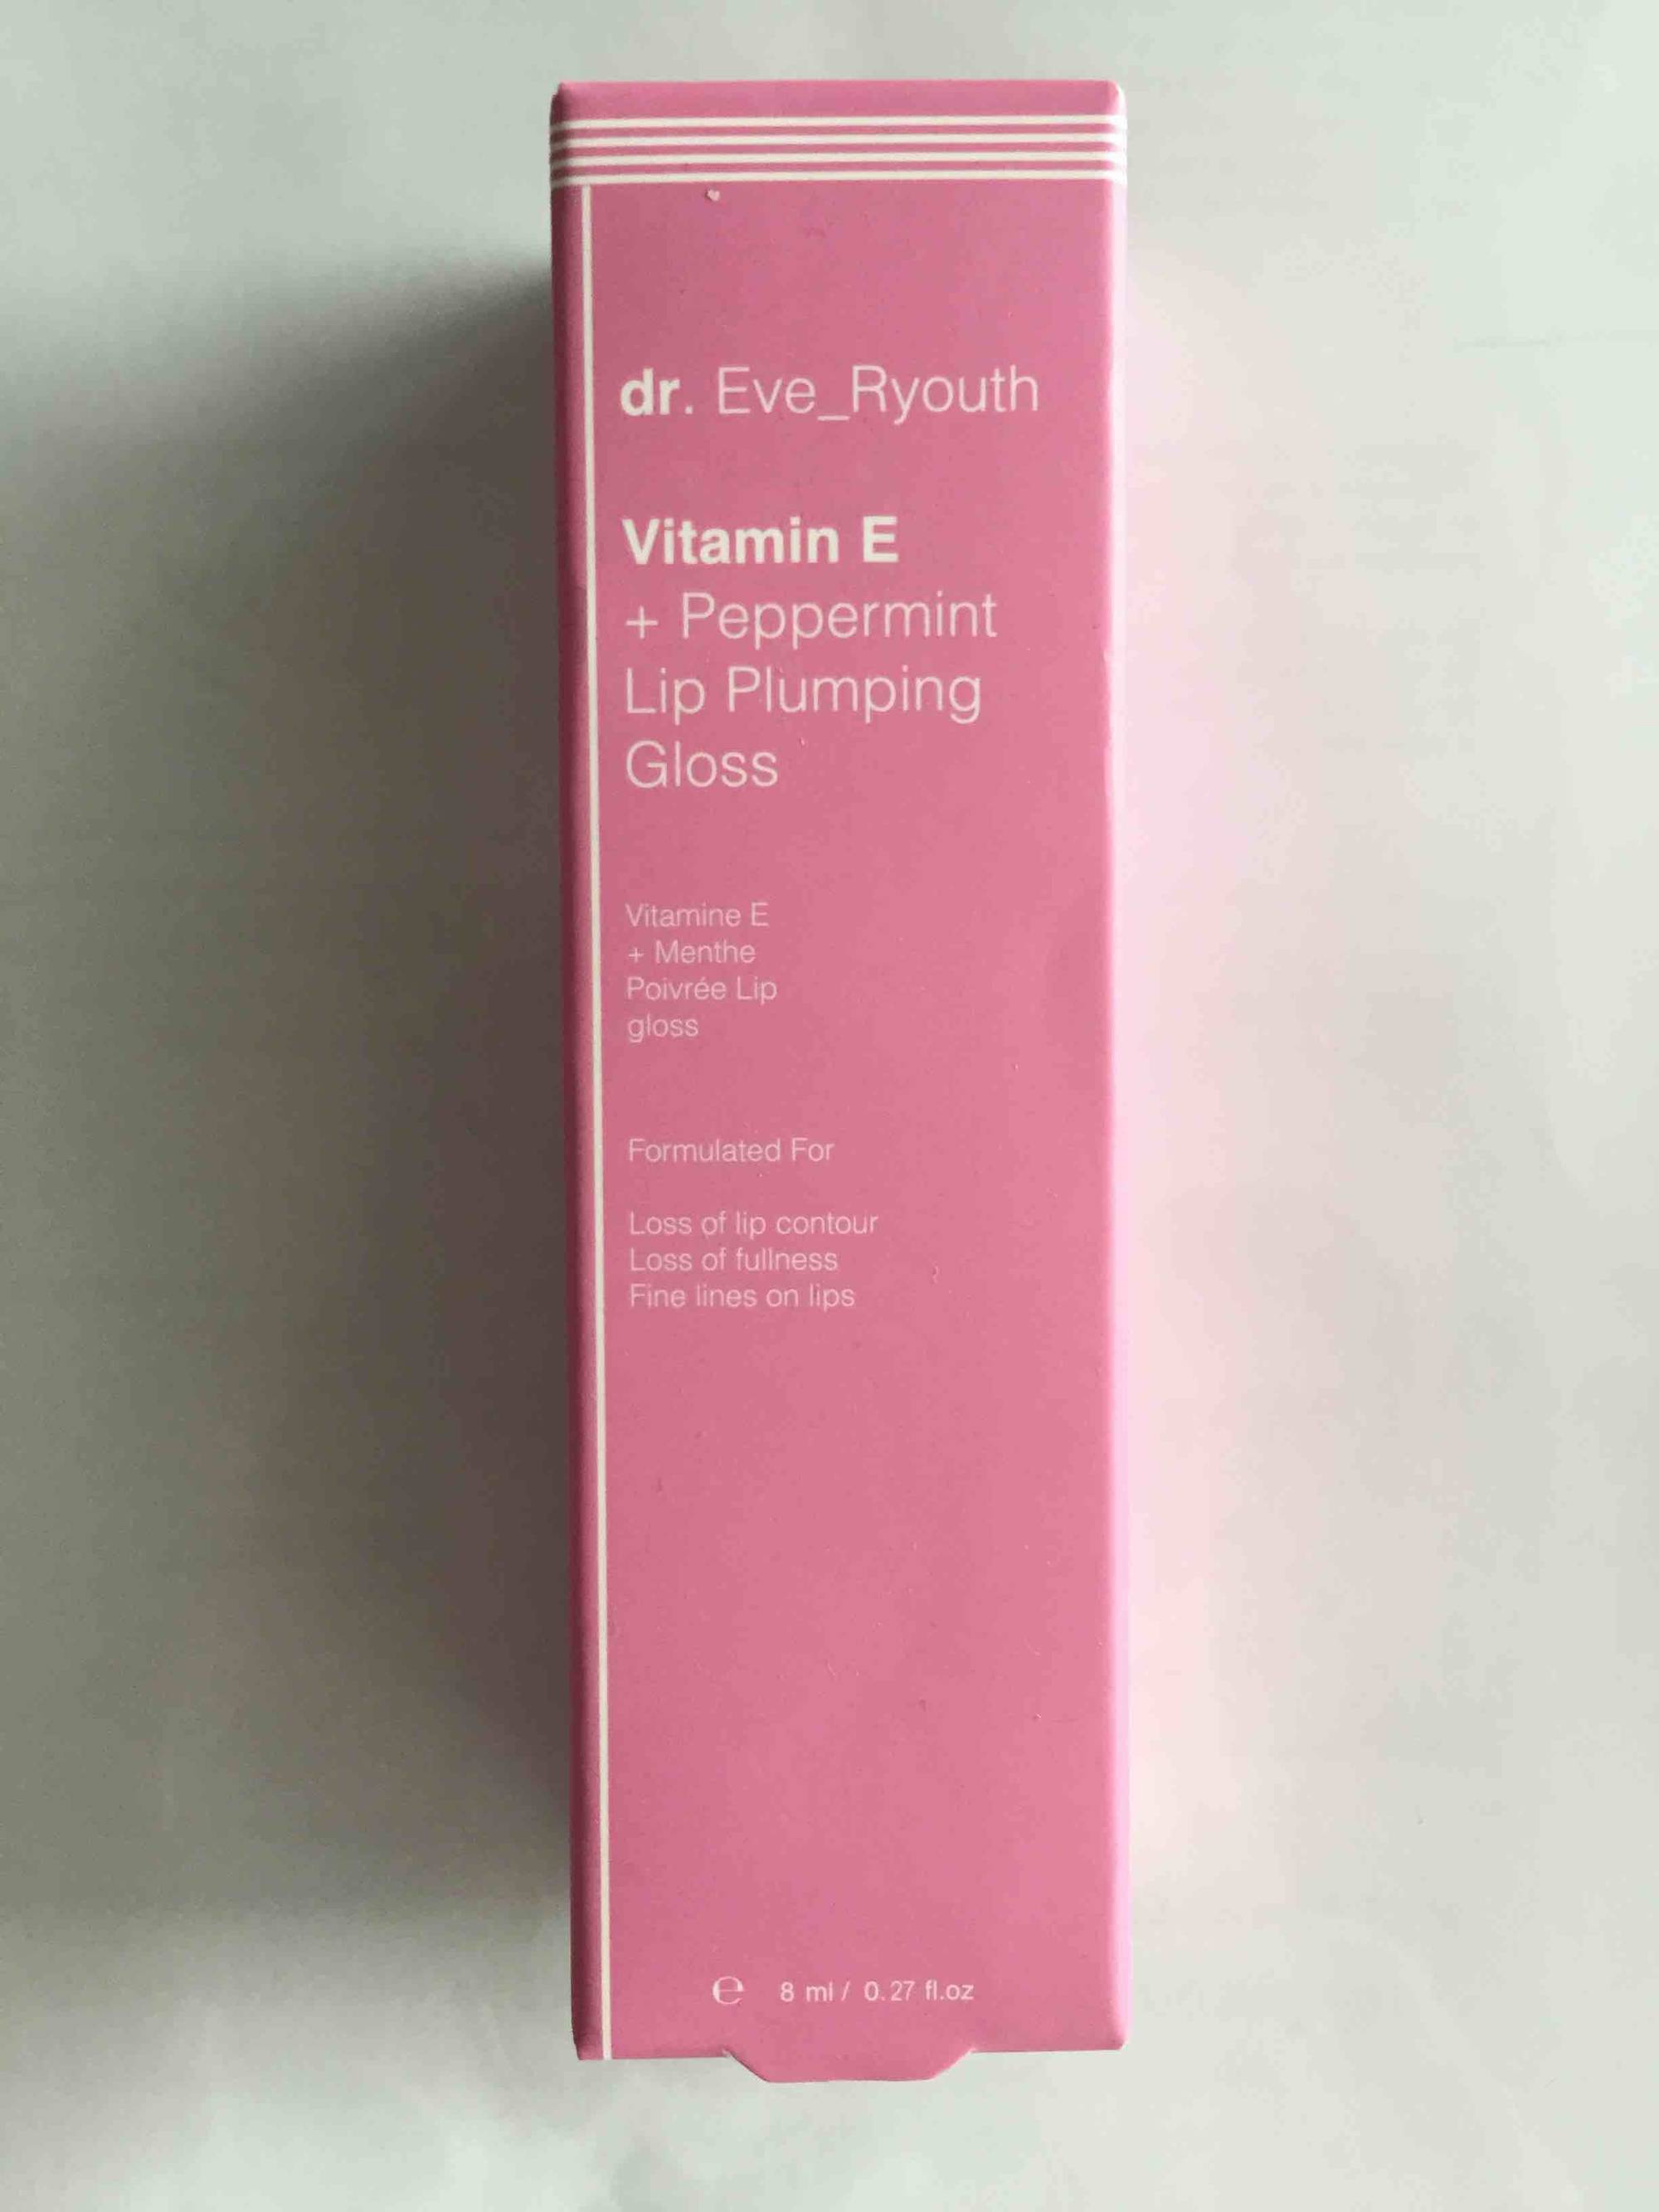 DR. EVE RYOUTH - Vitamin E + Menthe Poivrée Lip gloss